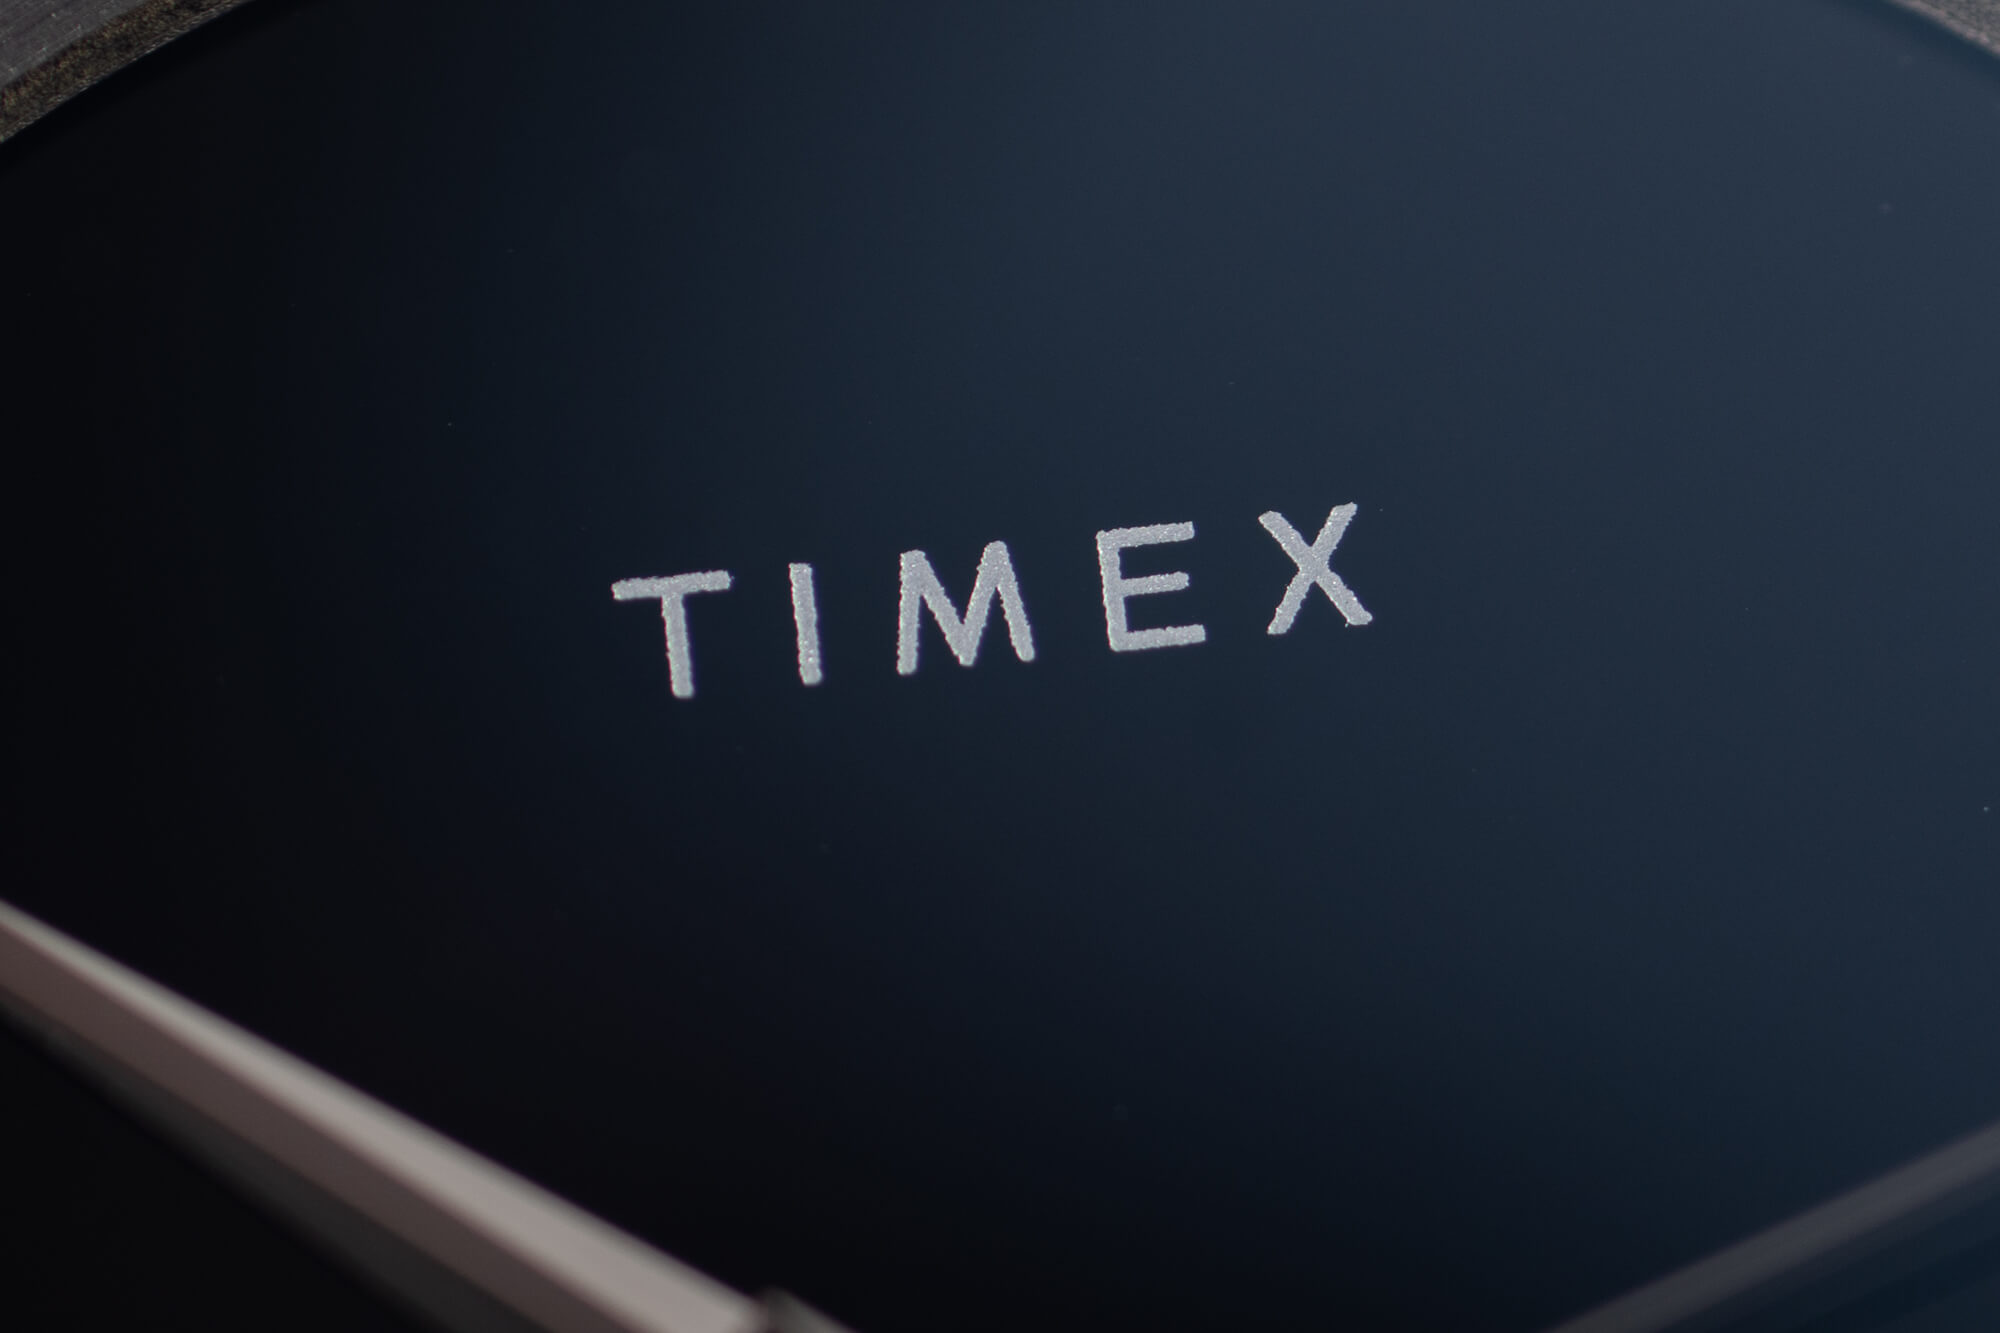 Дебют на руке: Часы Timex Giorgio Galli S2 Swiss Made